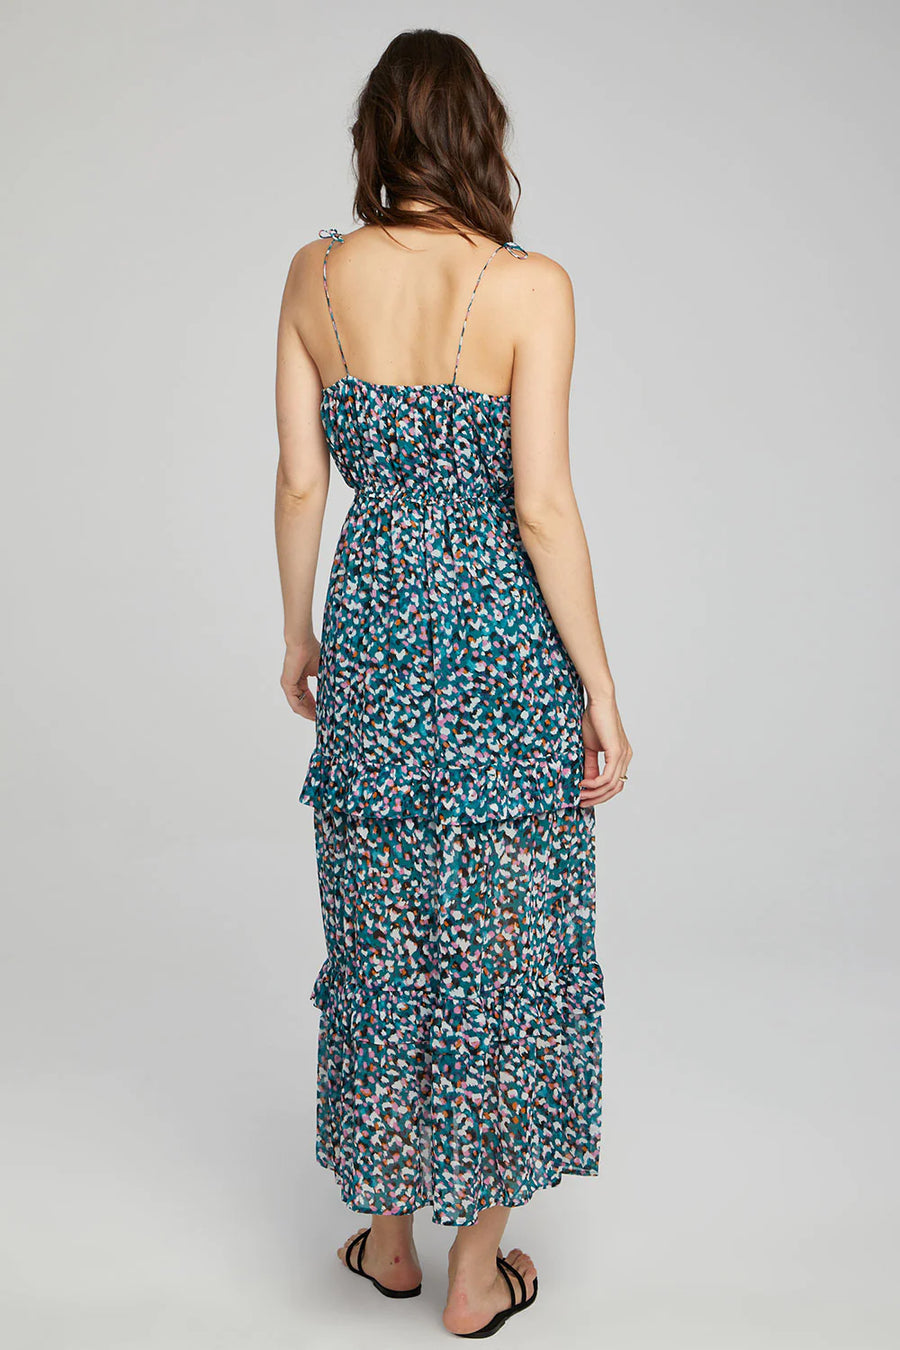 Graceland Dress